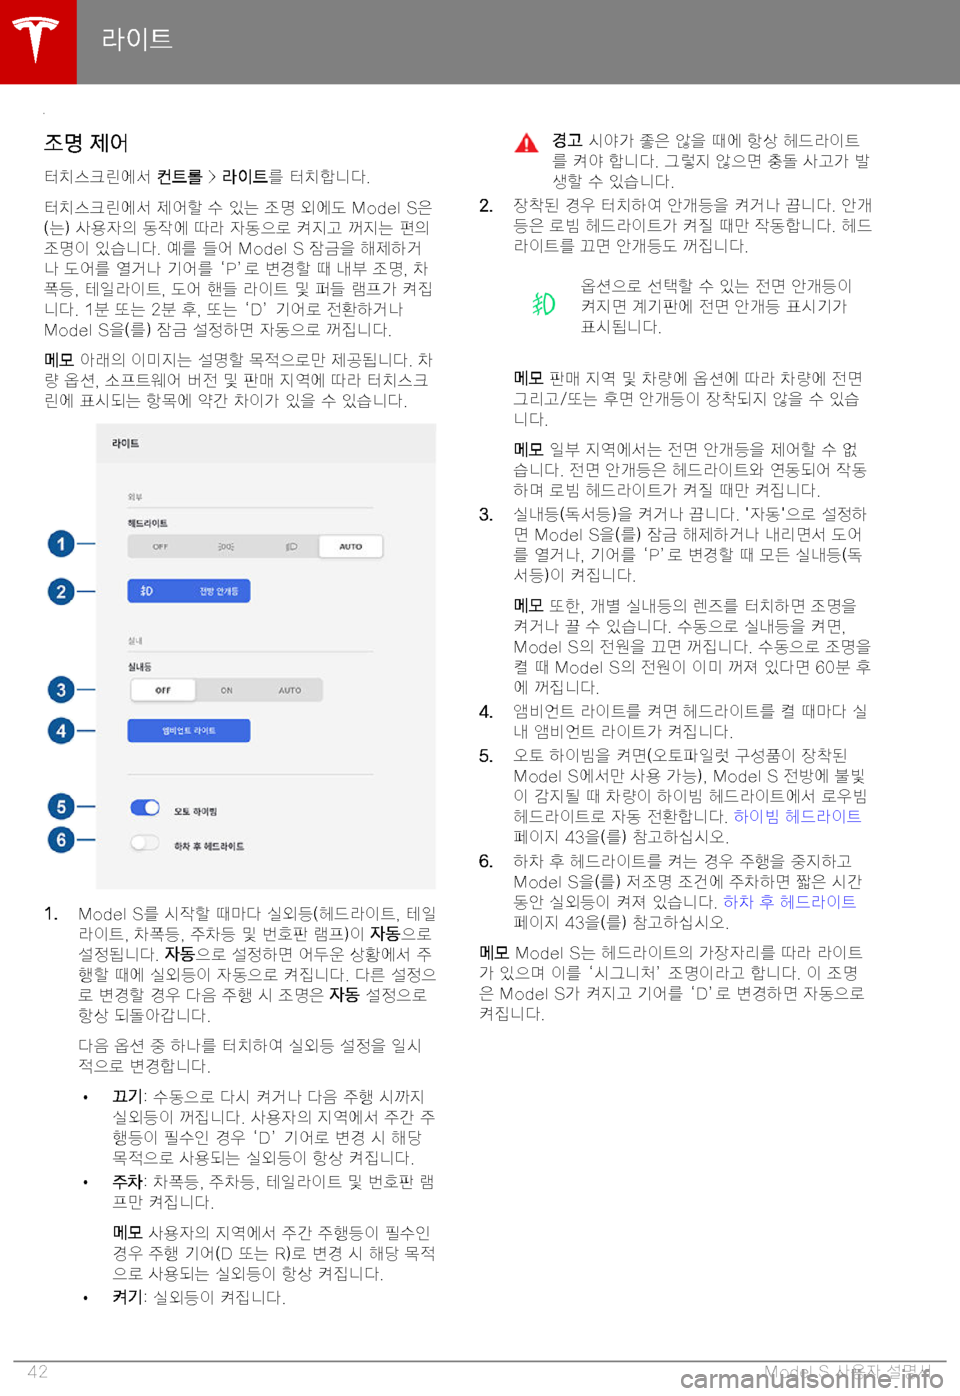 TESLA MODEL S 2019  사용자 가이드 (in Korean) -|=tH